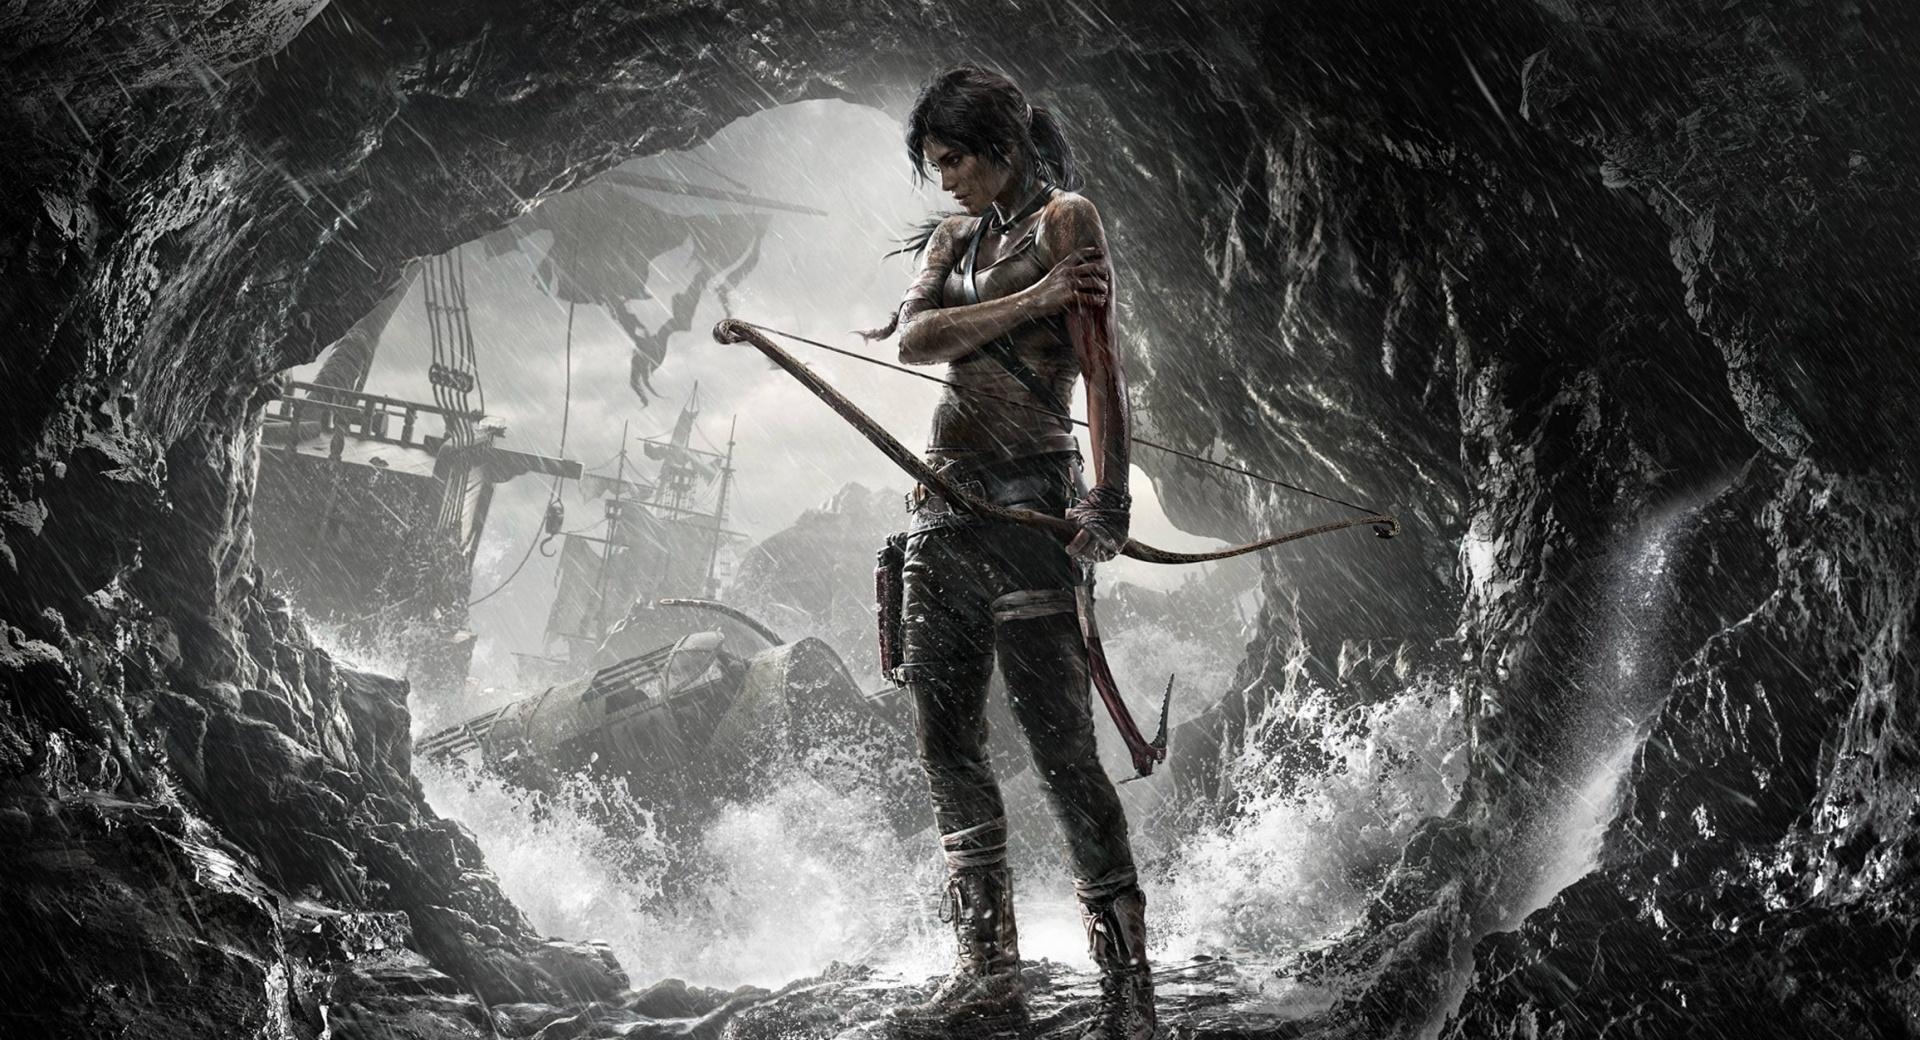 Lara Croft 2013 at 1280 x 960 size wallpapers HD quality